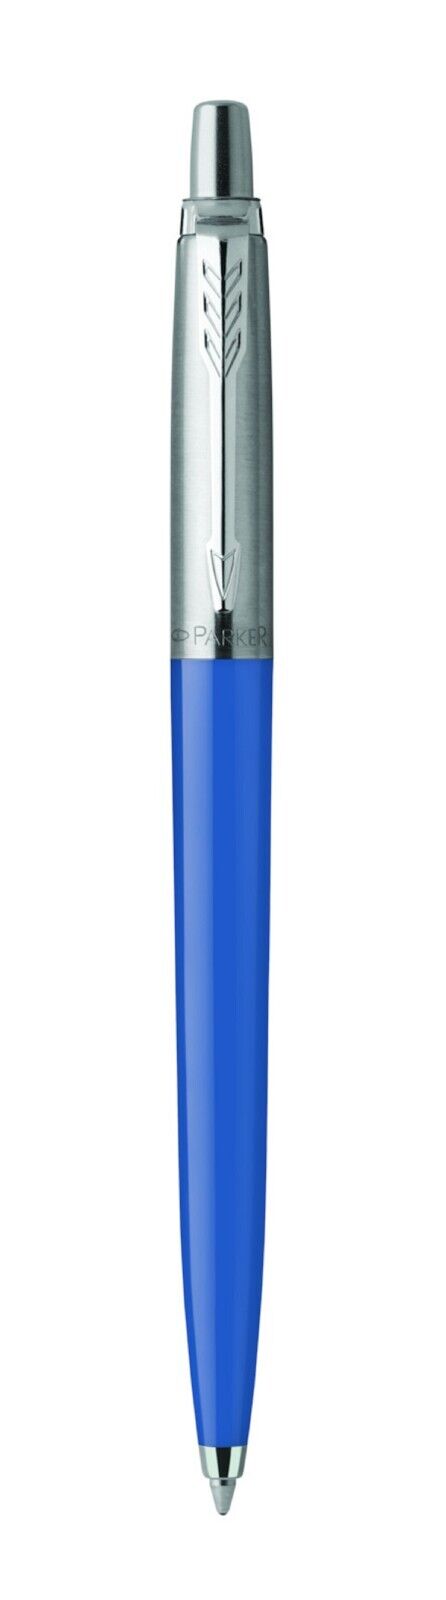 Parker Jotter Original Blue Denim Ballpoint Pen Blue Ink Made in France New